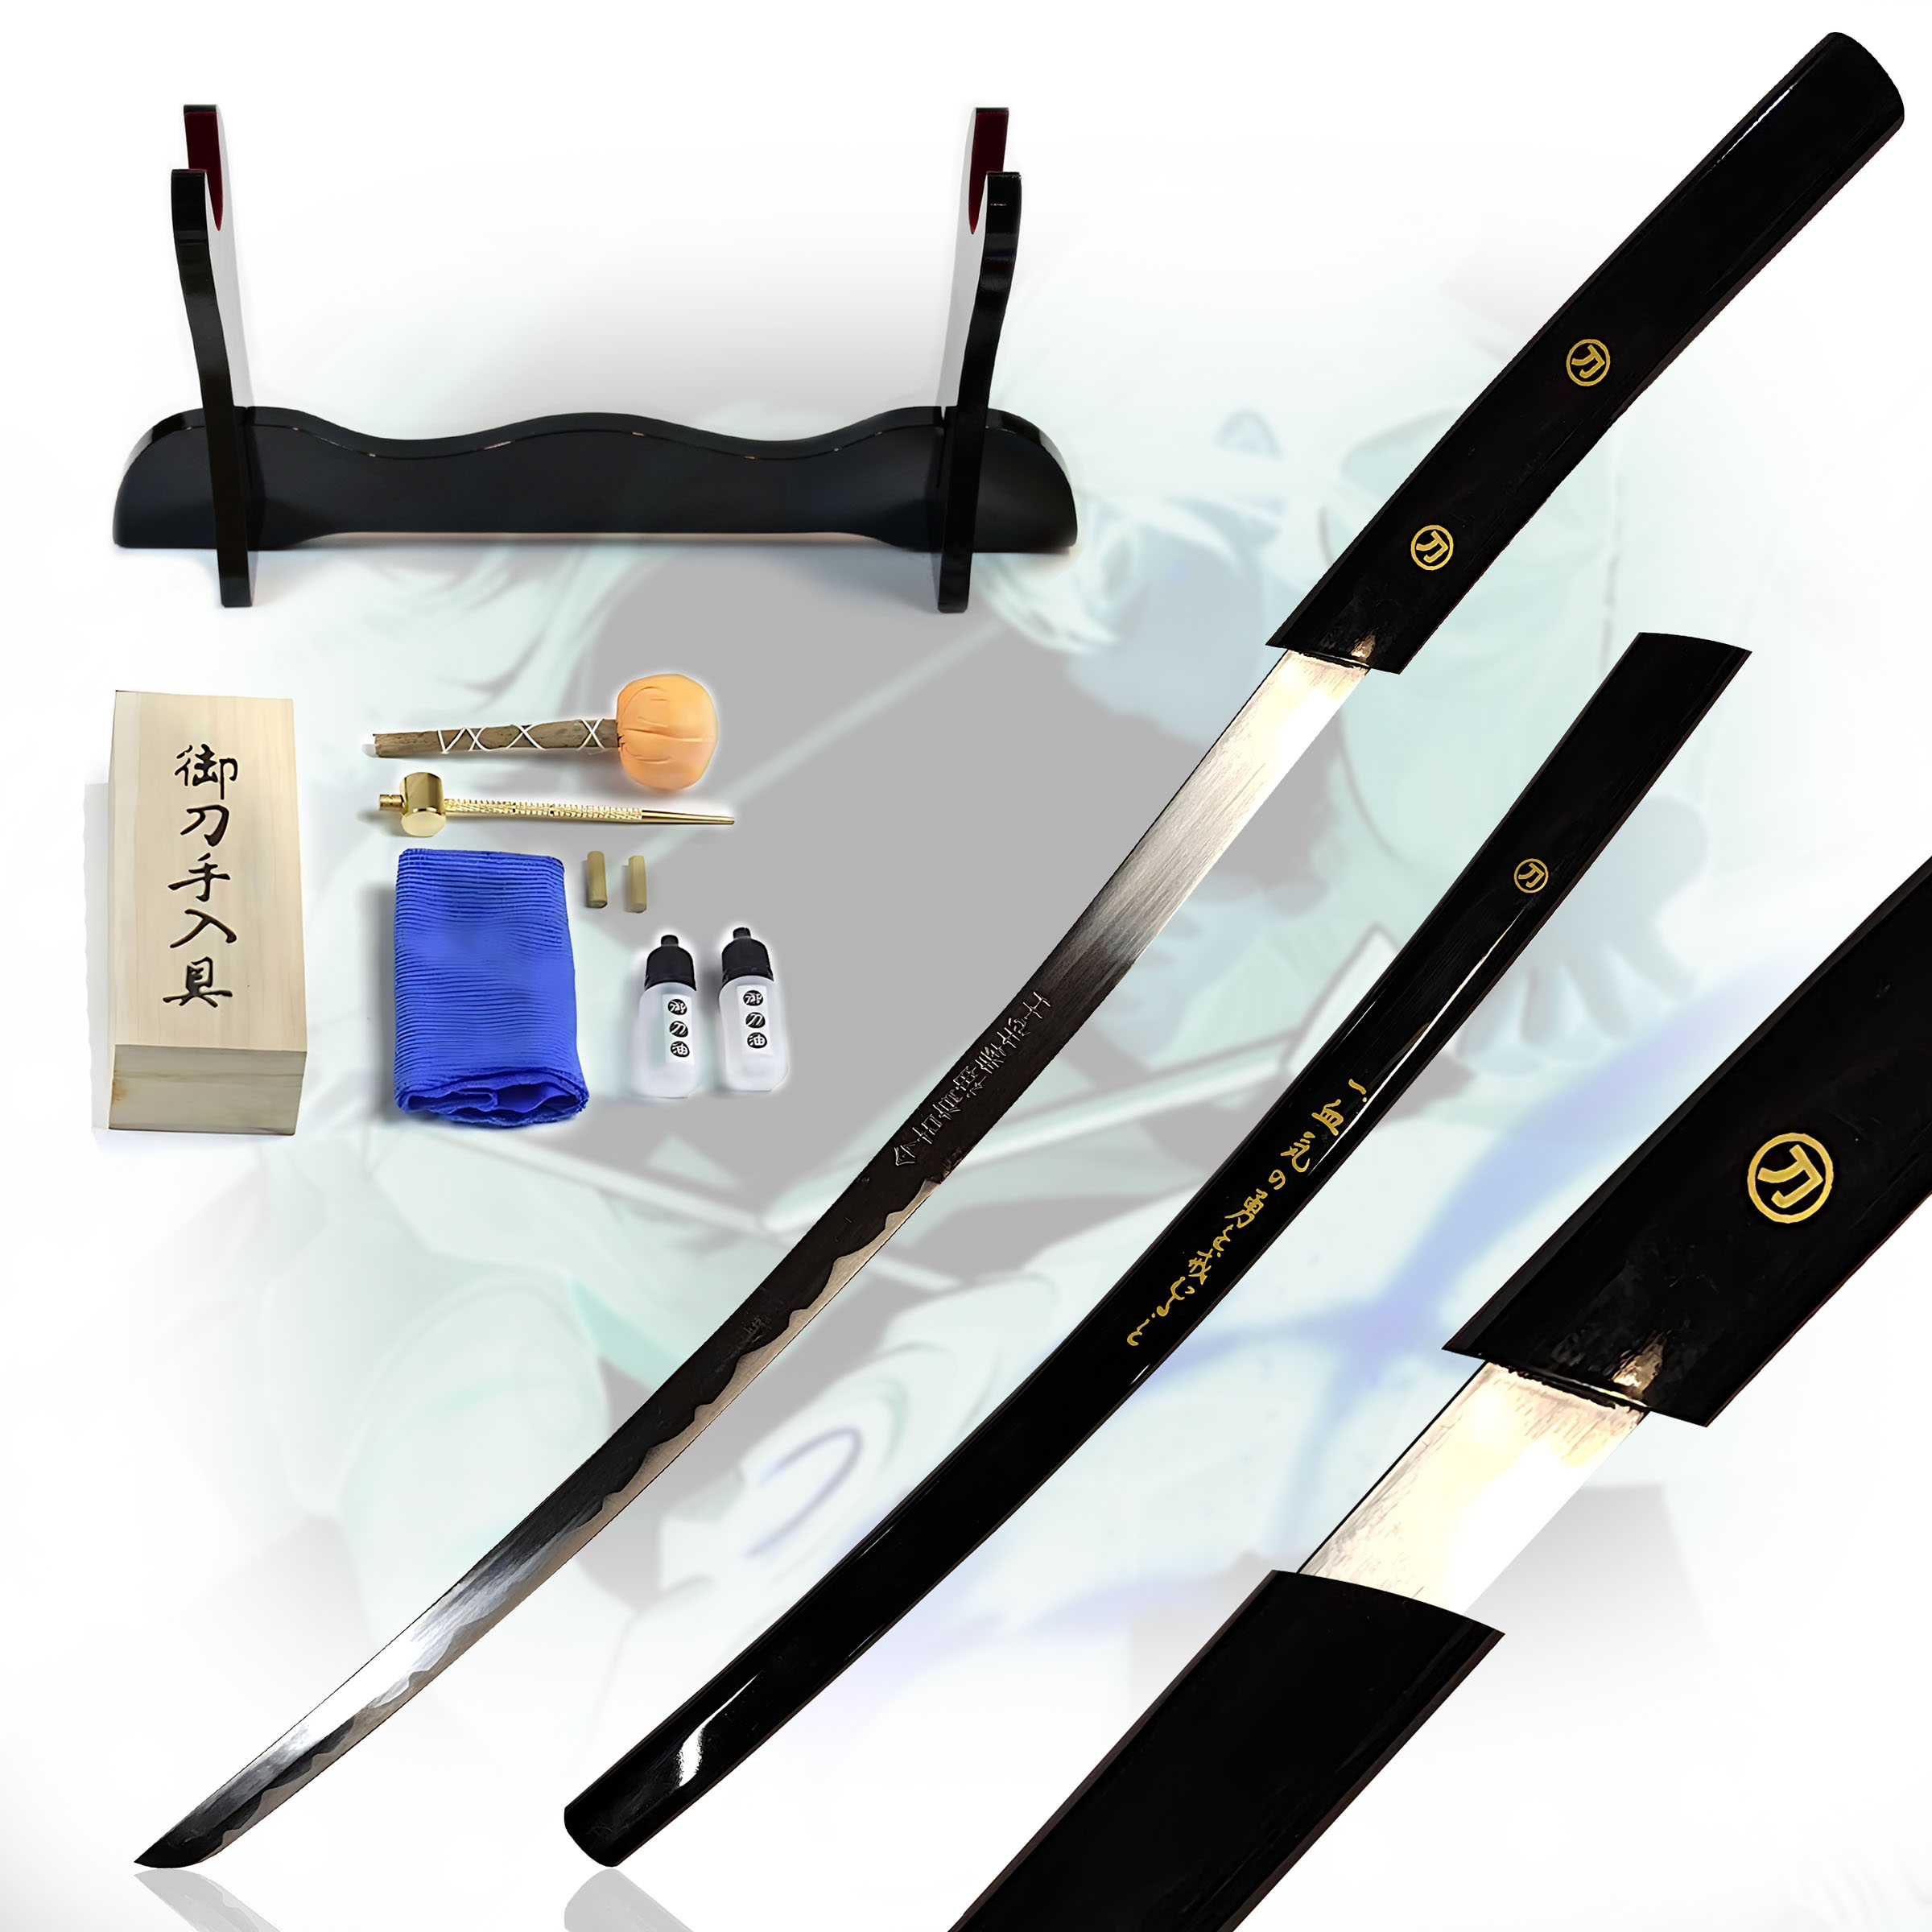 O Ren Ishii Sword, Handforged & Folded, Set